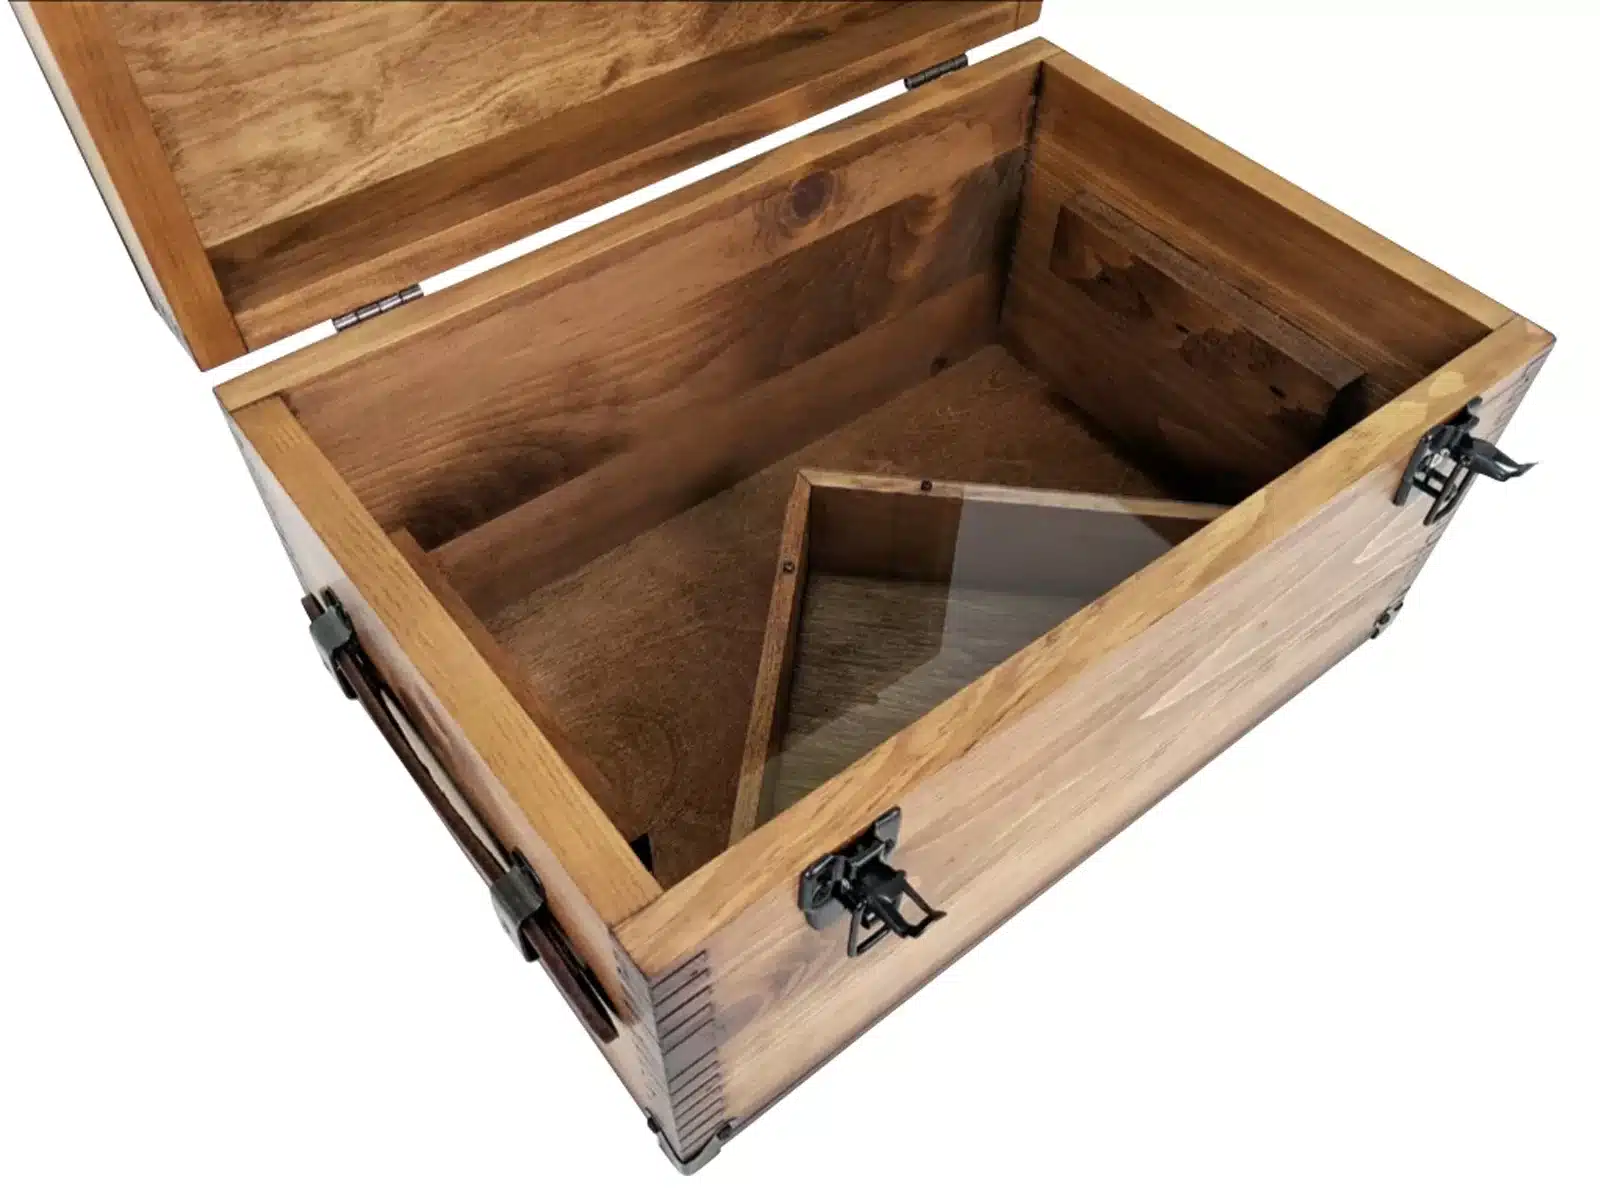 Sacred Crystal Box - Relic Wood